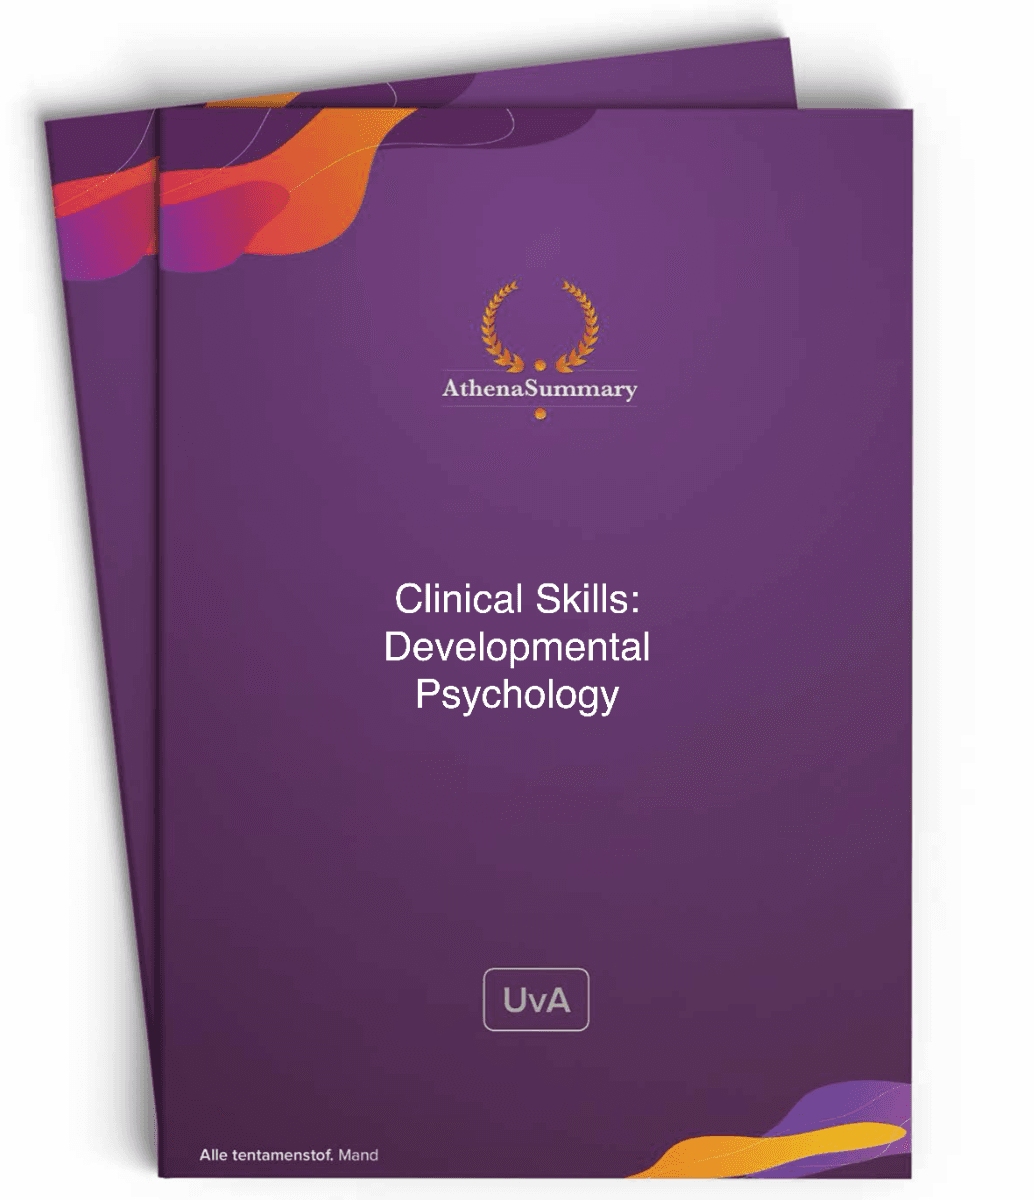 Literature Summary: Clinical Skills: Developmental Psychology